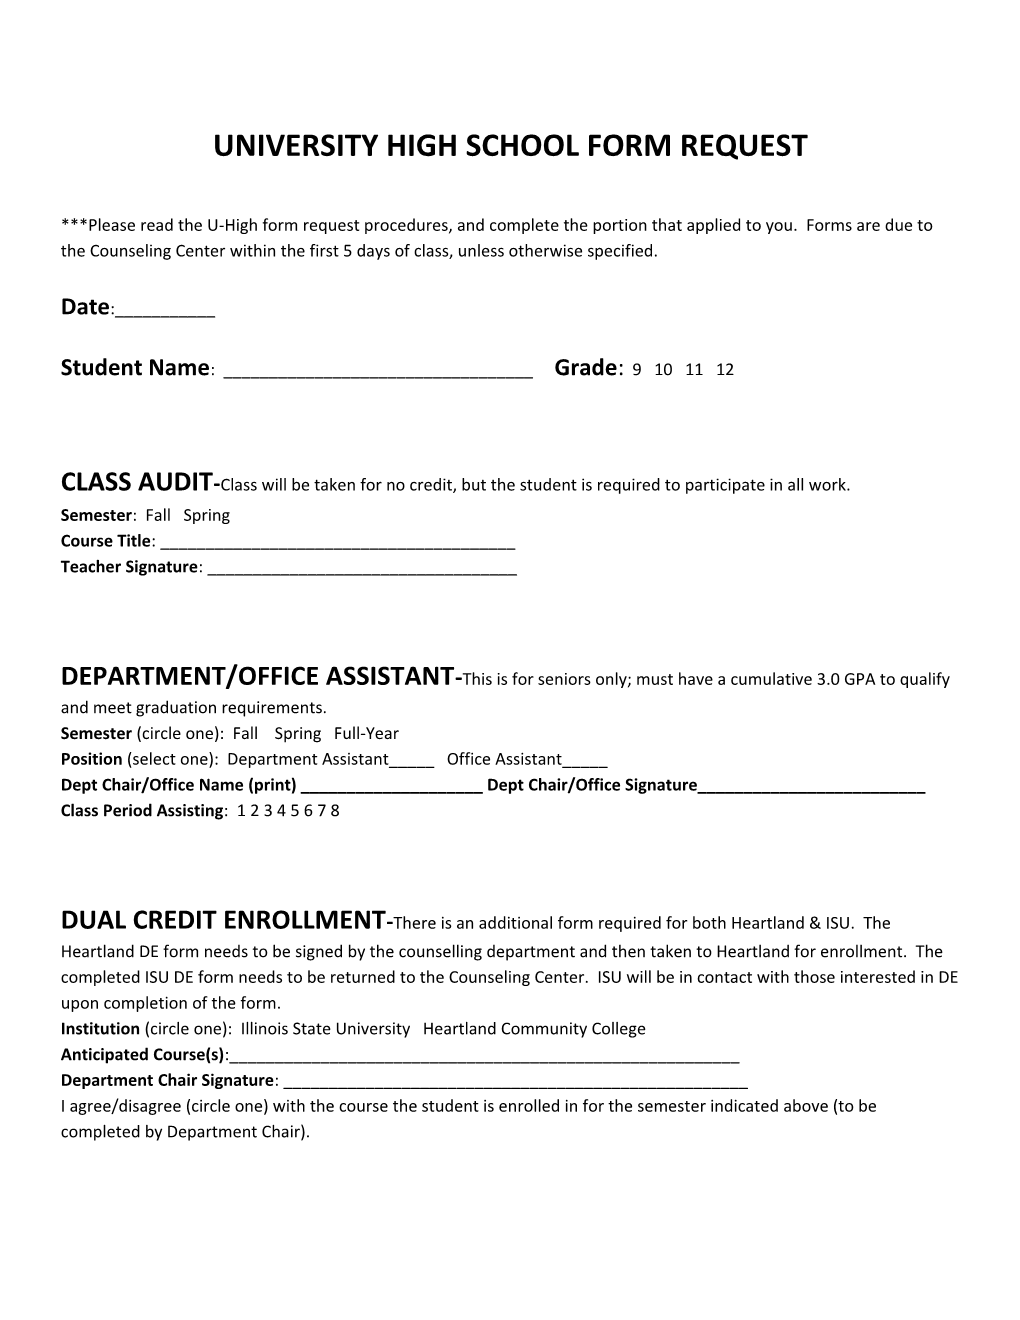 University High School Form Request